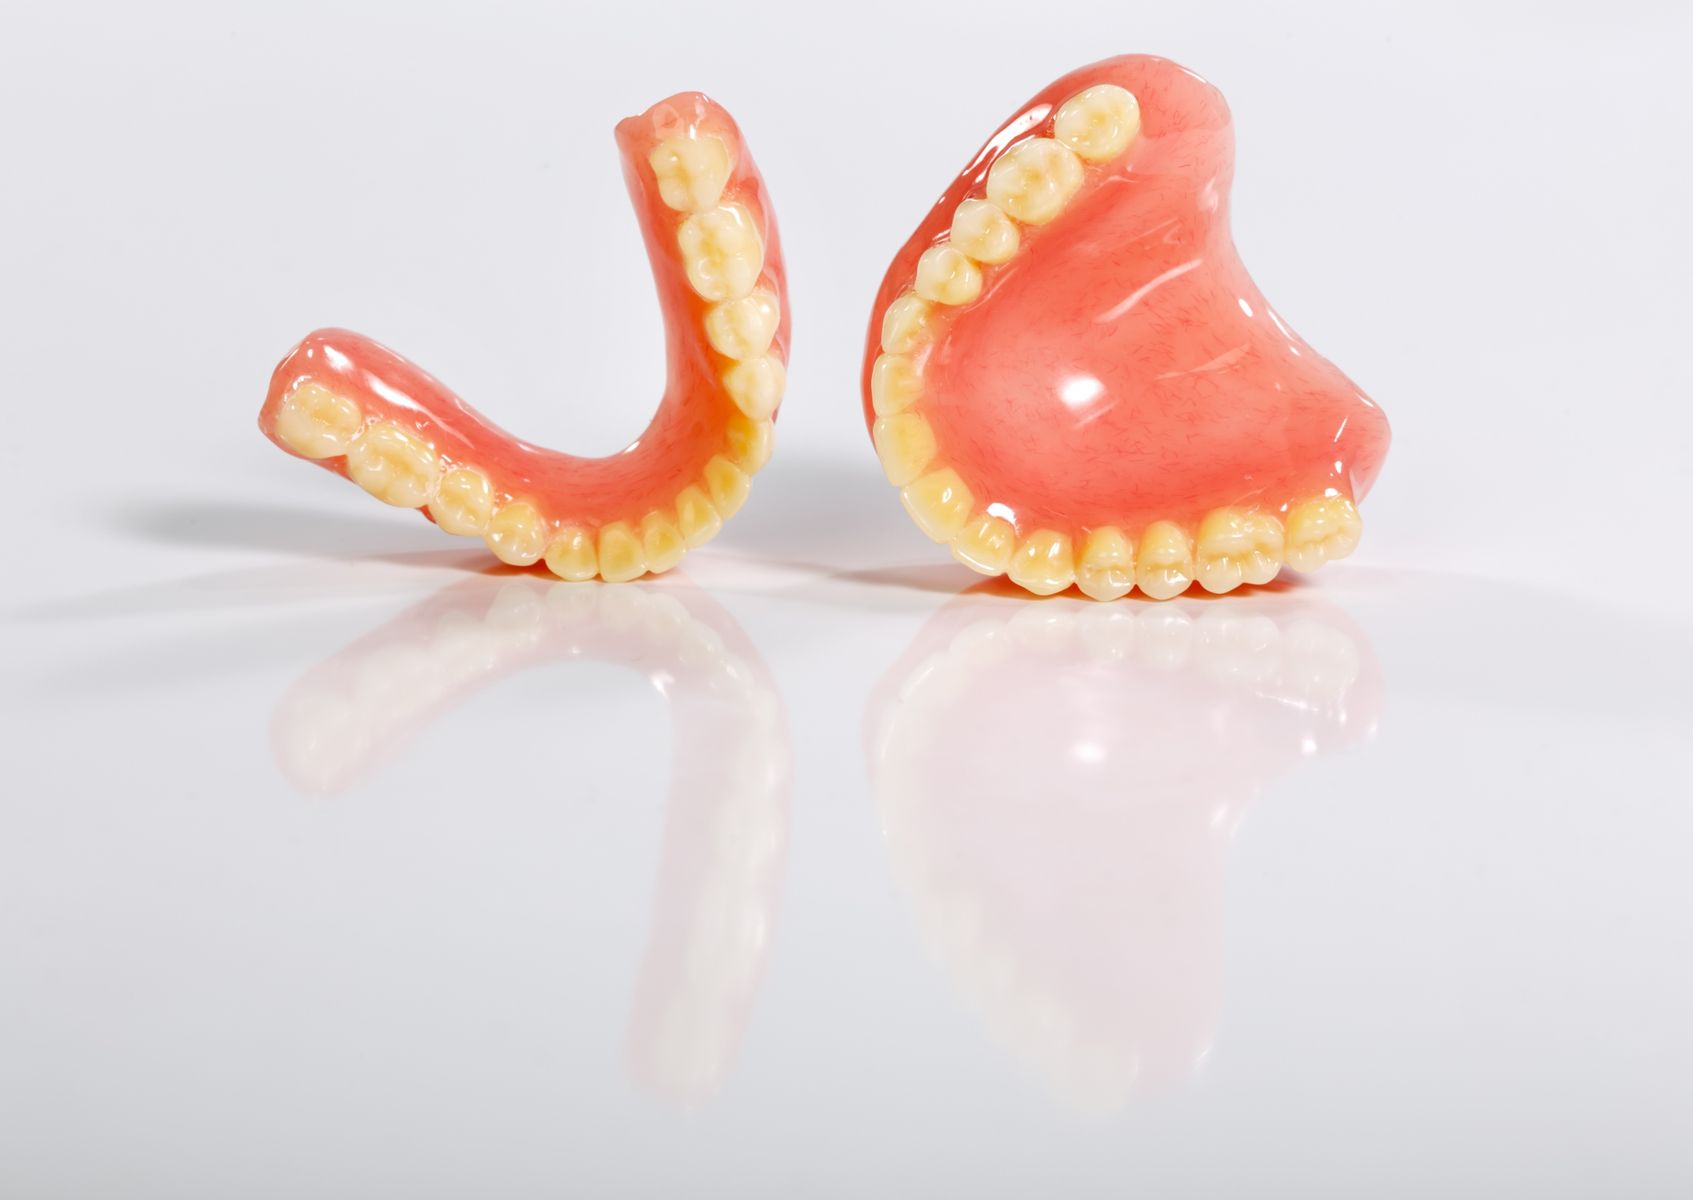 Dentures & Partials